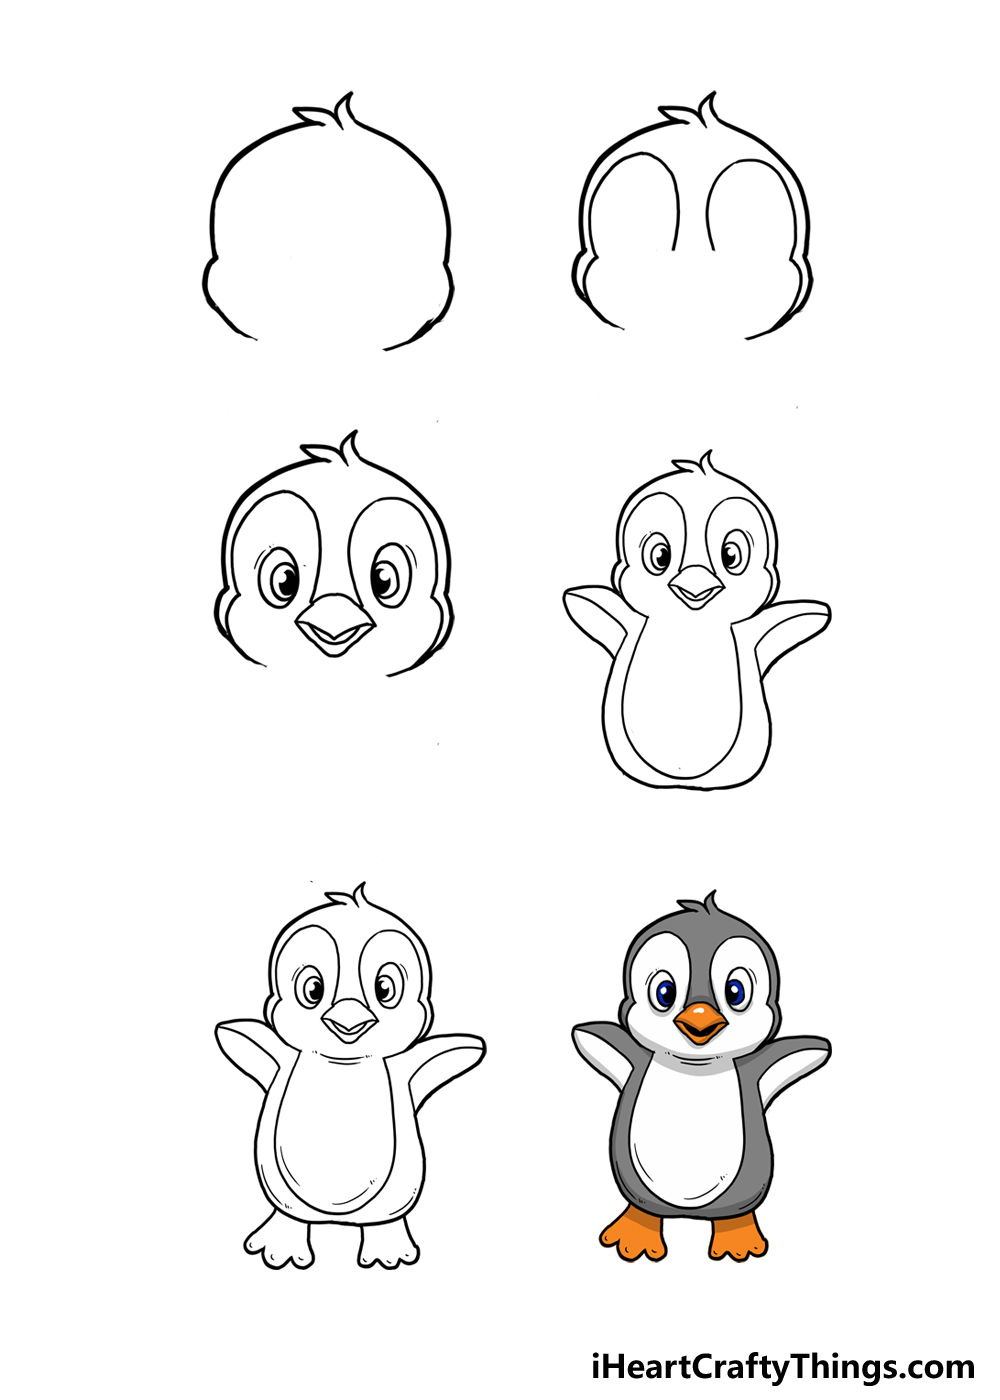 How to Draw A Cartoon Penguin